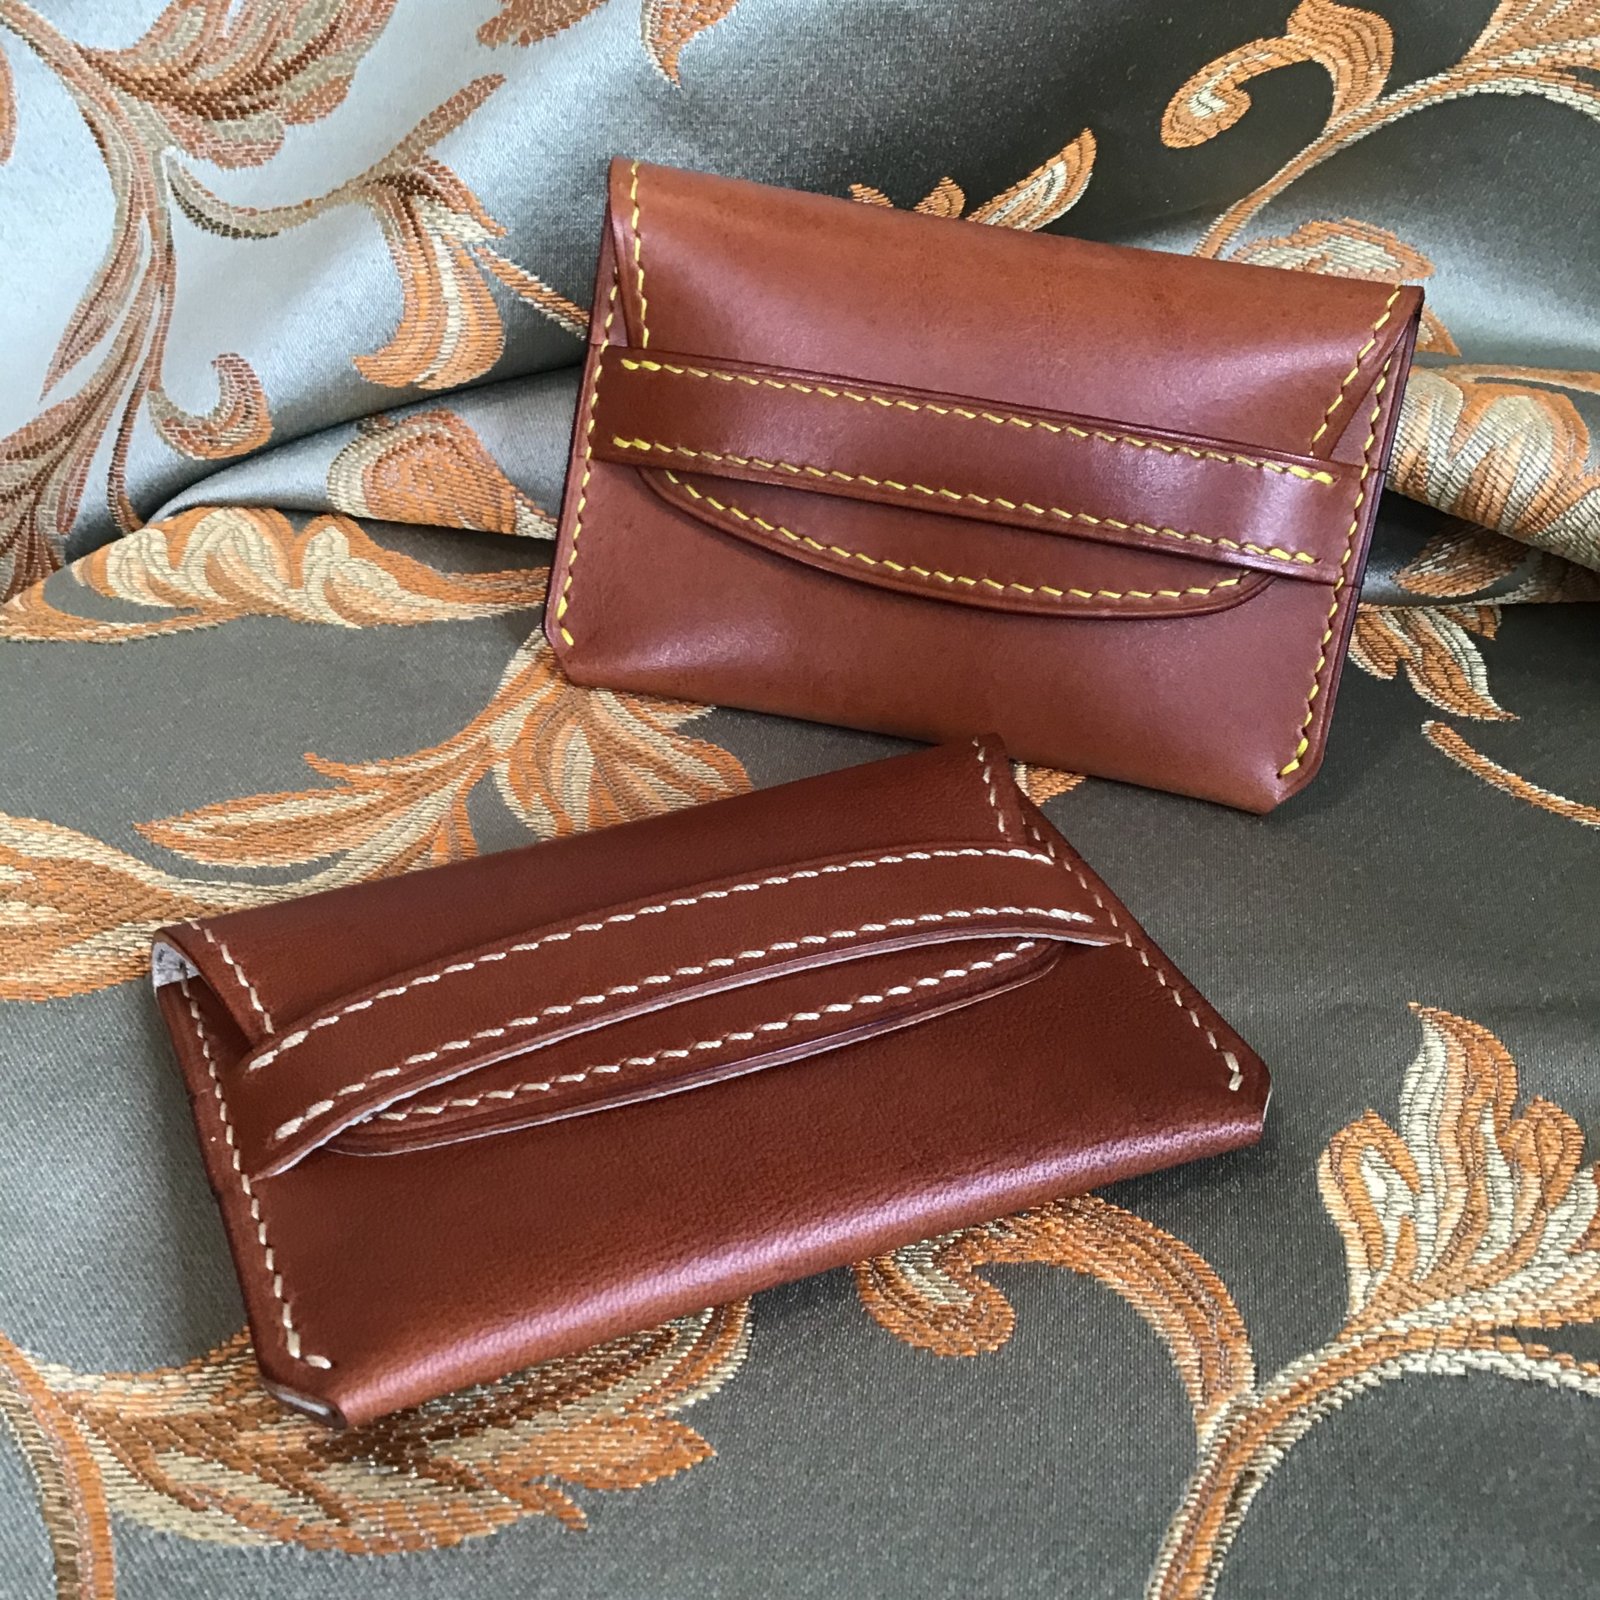 Handmade Italian leather wallets